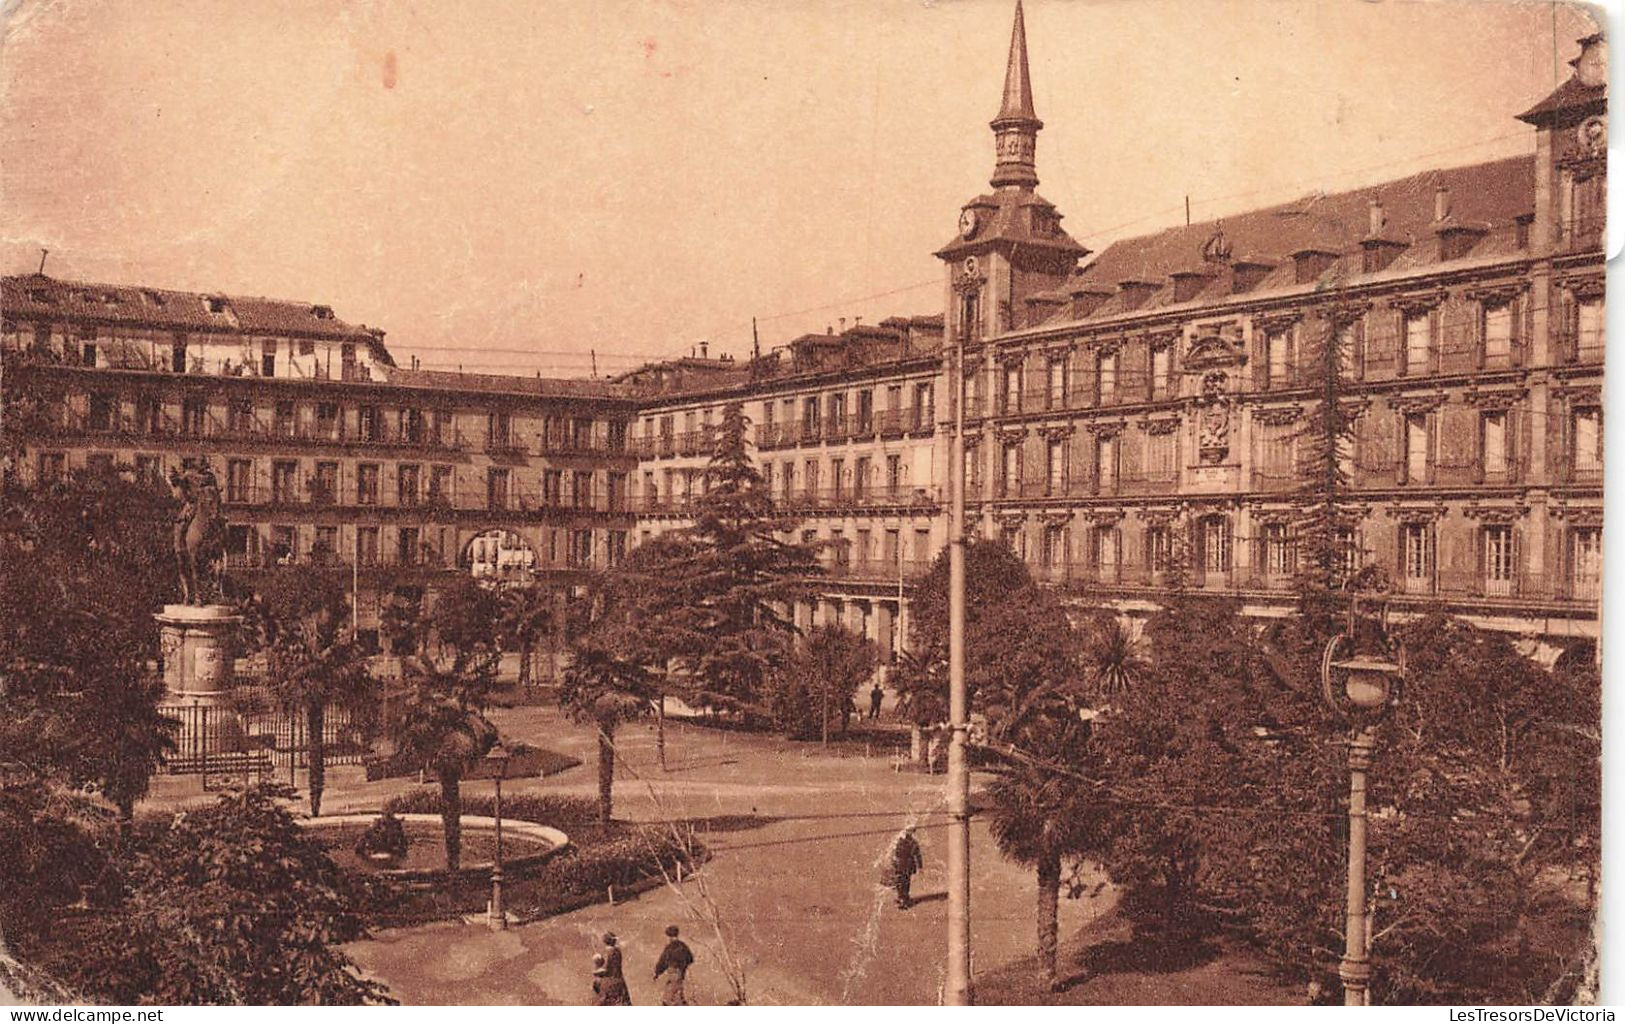 ESPAGNE - Madrid - Plaza Mayor - Carte Postale Ancienne - Madrid